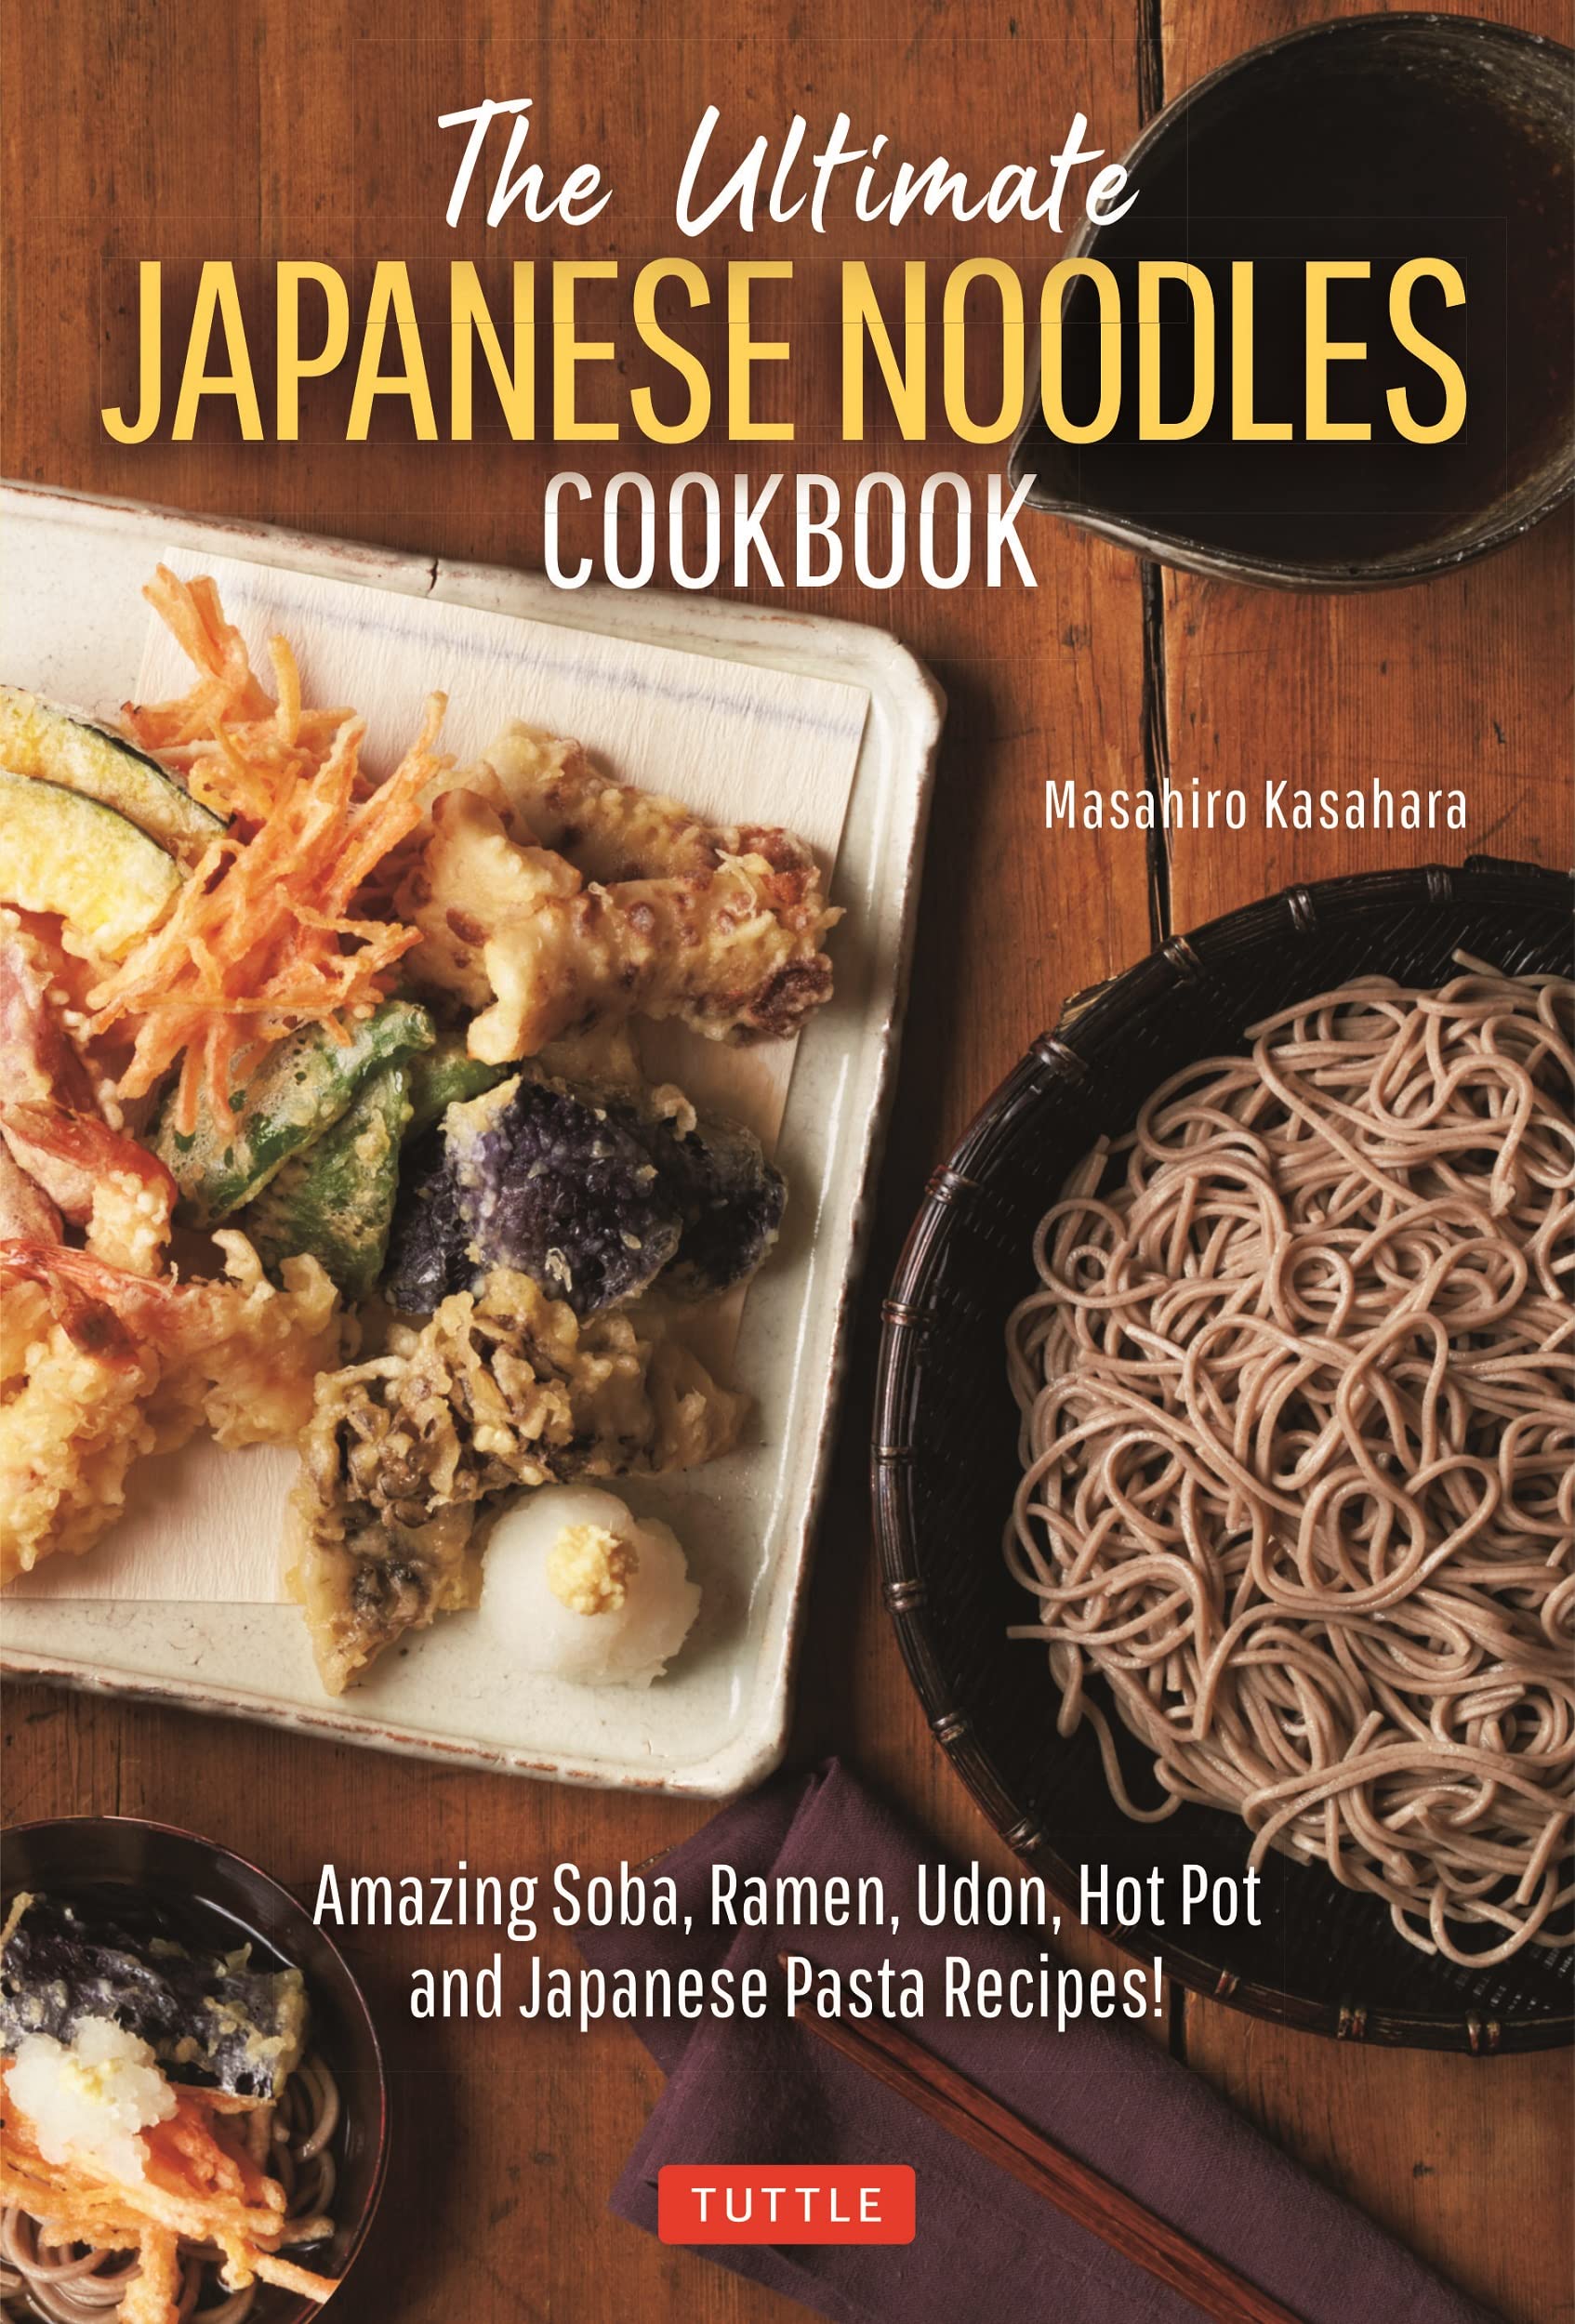 The Ultimate Japanese Noodles Cookbook: Amazing Soba, Ramen, Udon, Hot Pot and Japanese Pasta Recipes! (Masahiro Kasahara)